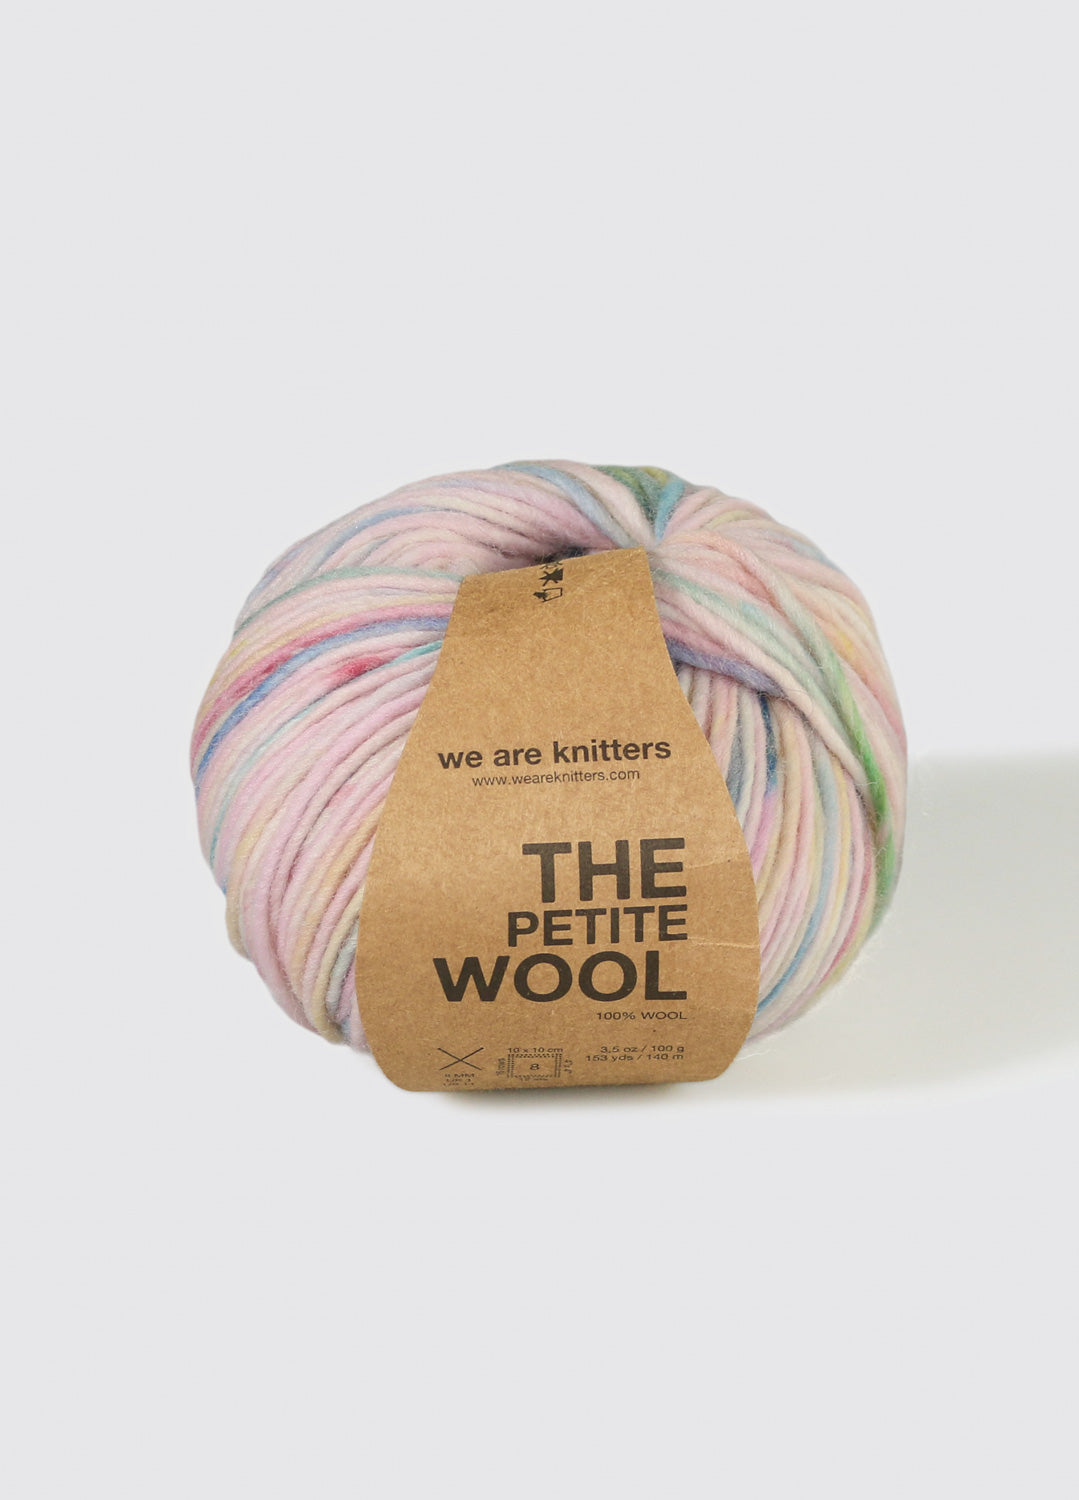 Thick Wool Yarn for Knitting Yarn for Fabric Crochet Yarn Hand Knit  100g/ball